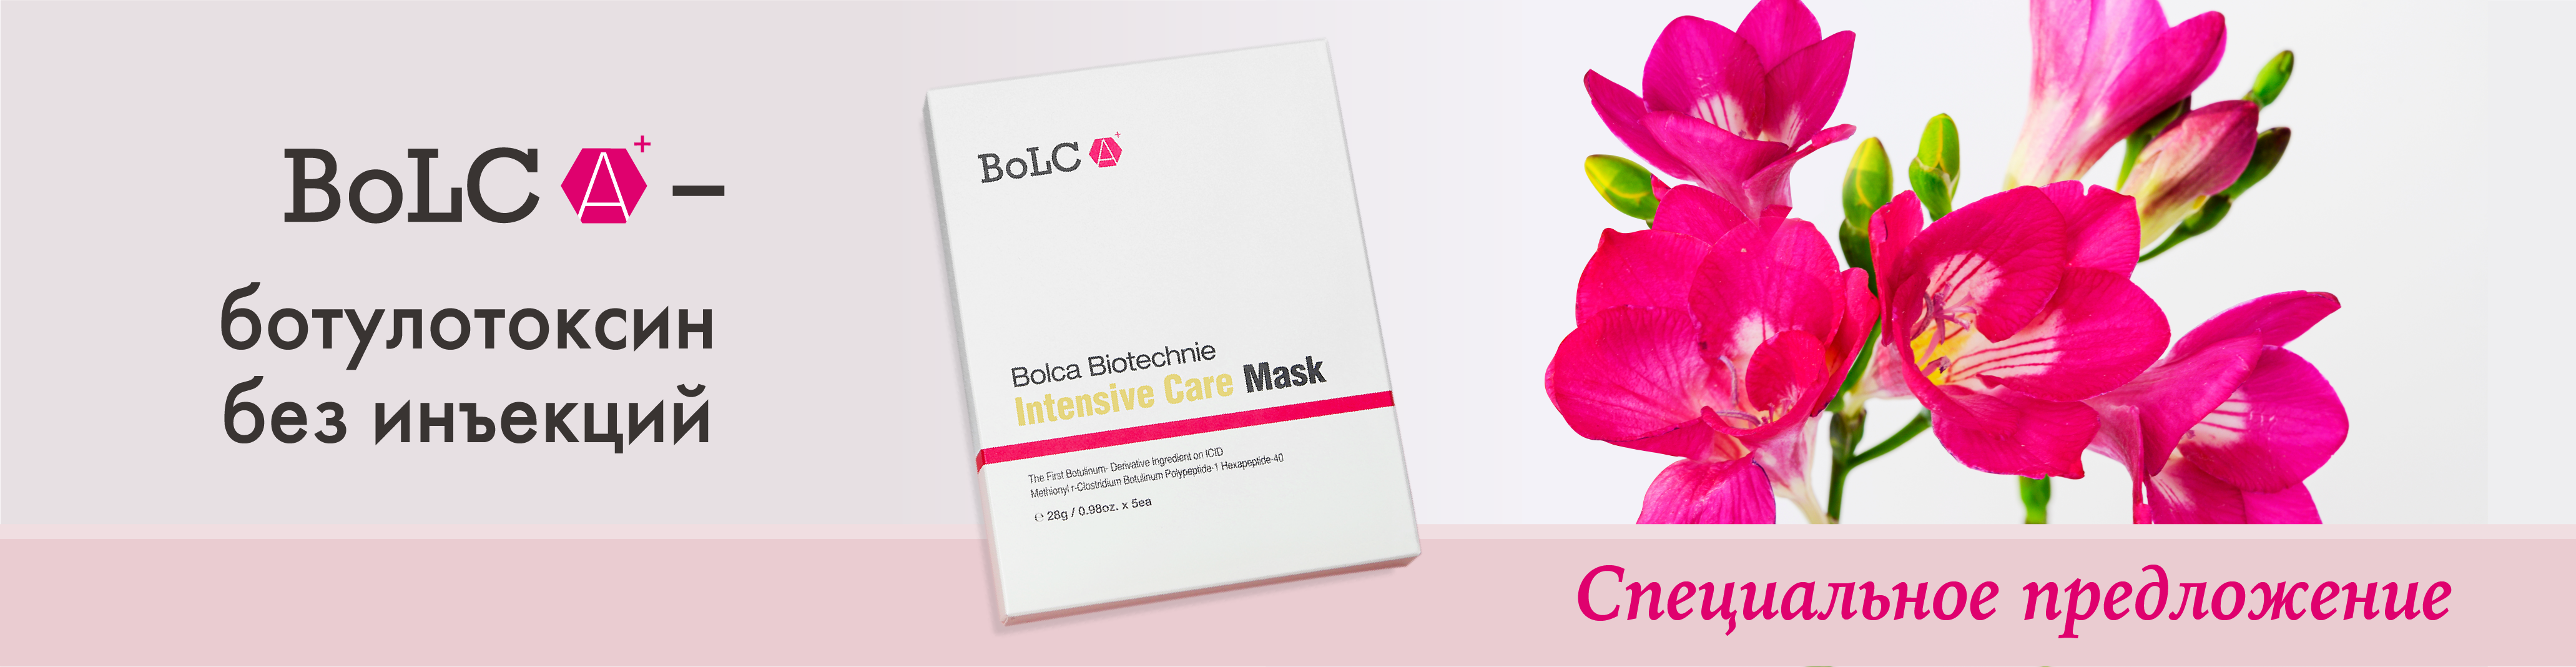 BoLCA   Biotechnie Intensive Care Mask со скидкой 20%